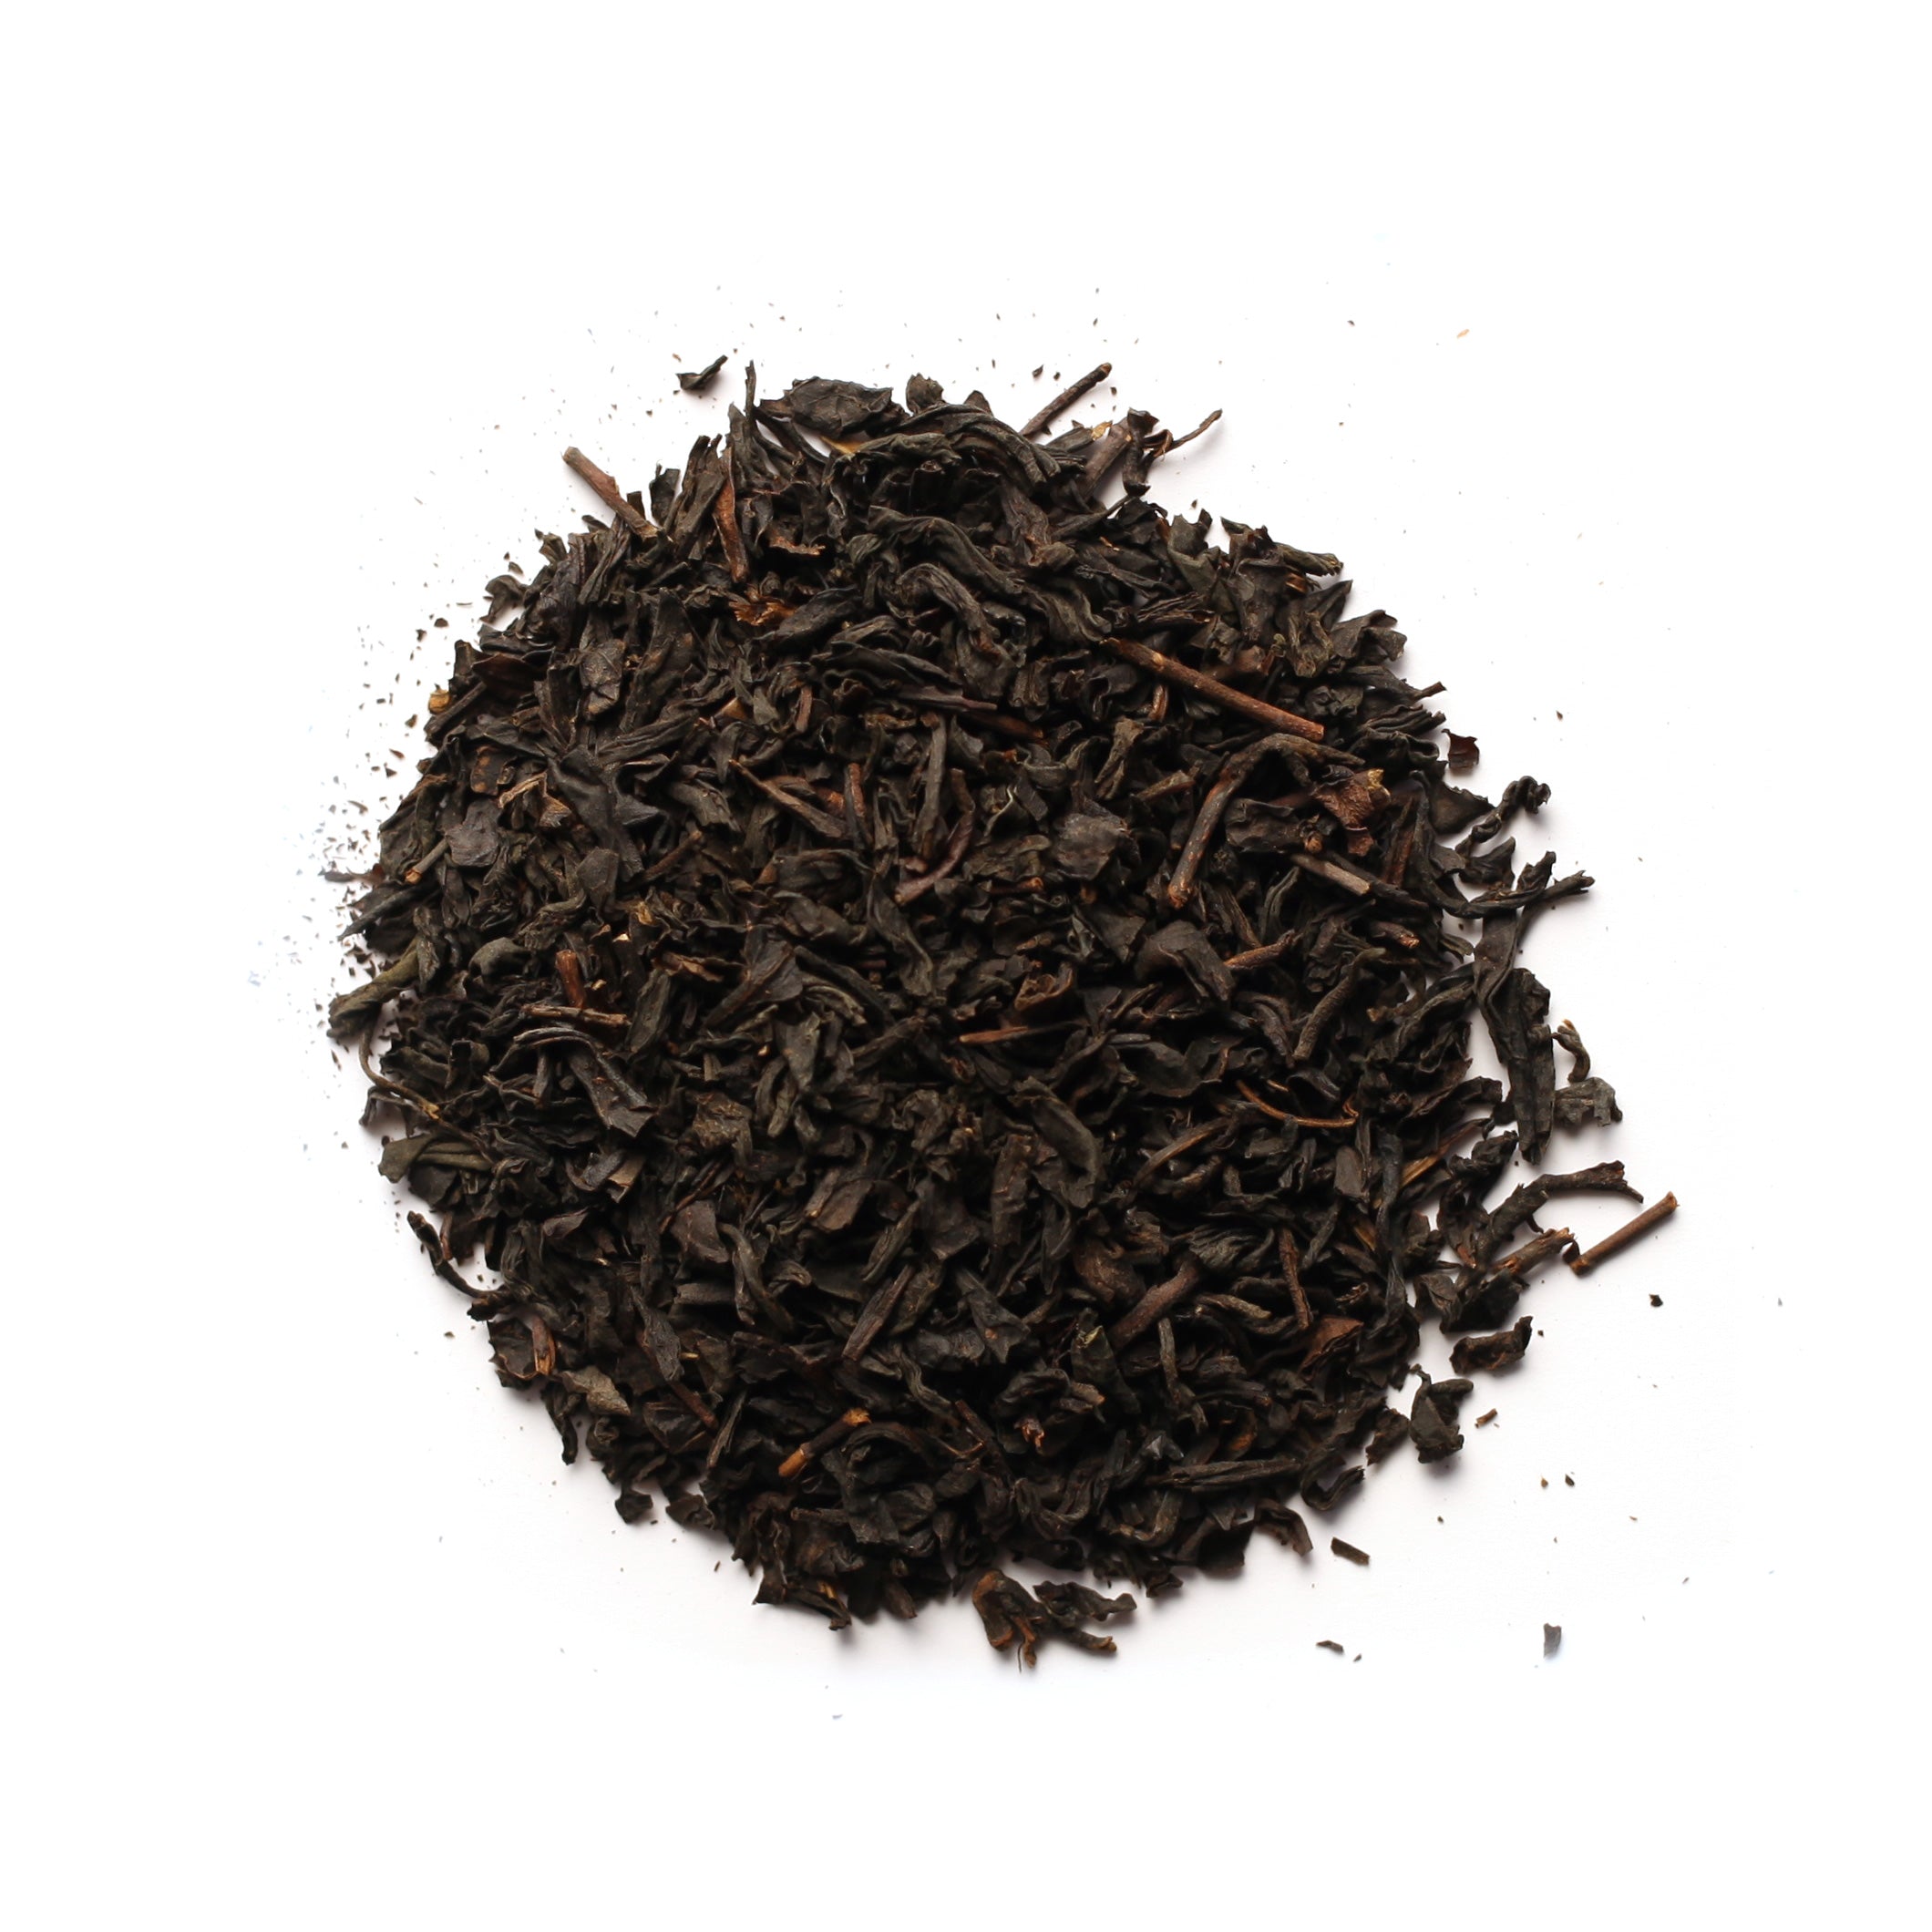 The Crepe Earl Grey - Heritage Gourmand Earl Grey Black Tea